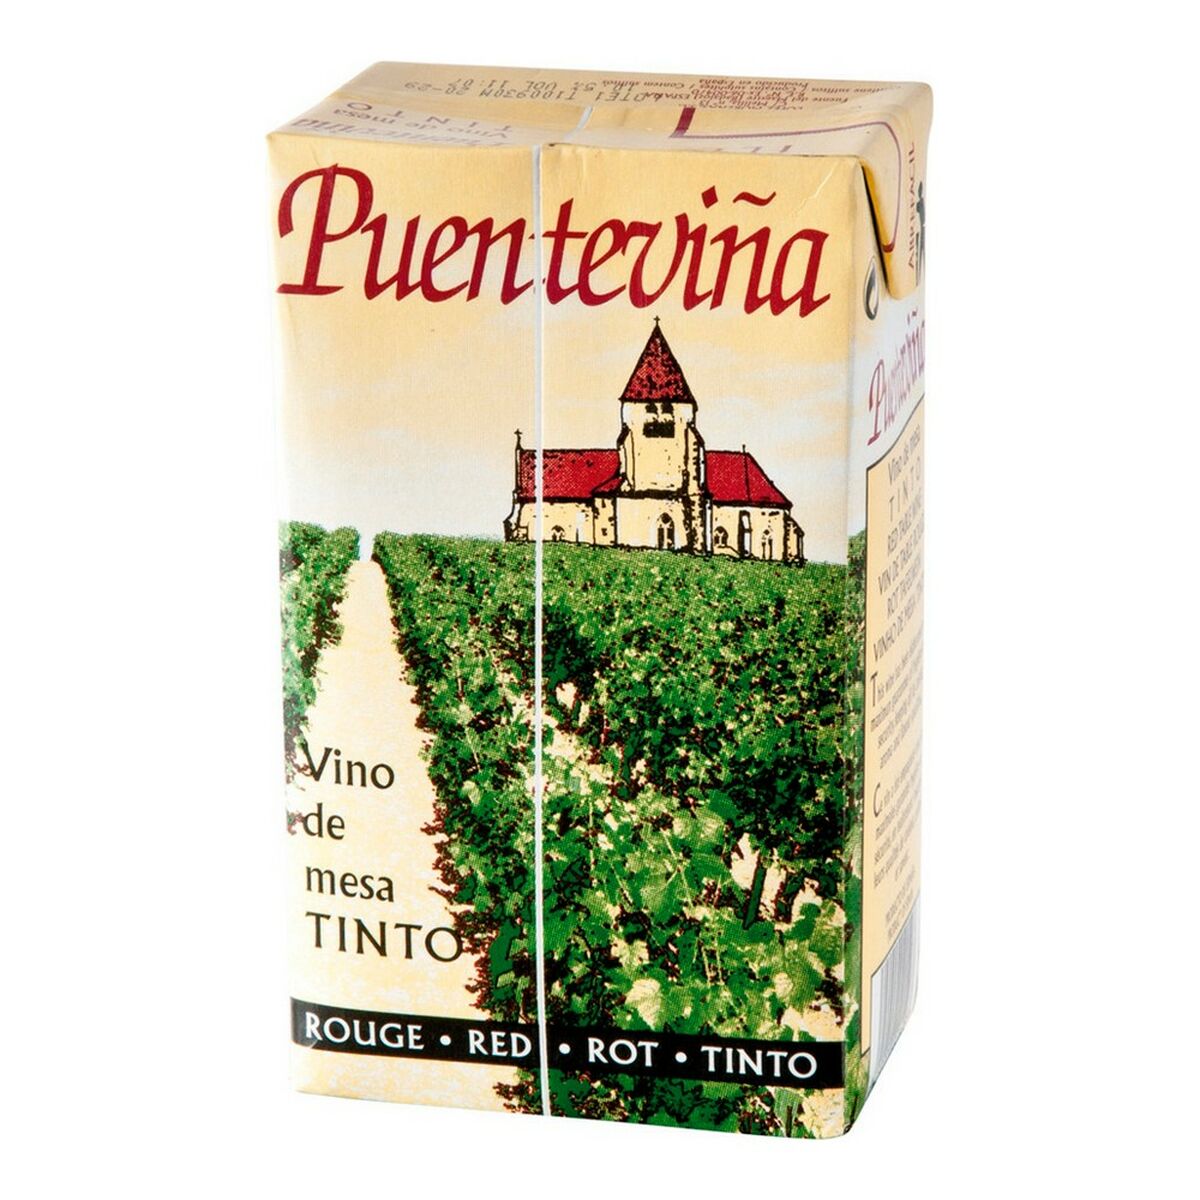 Vino Bianco Puenteviña (1 L)